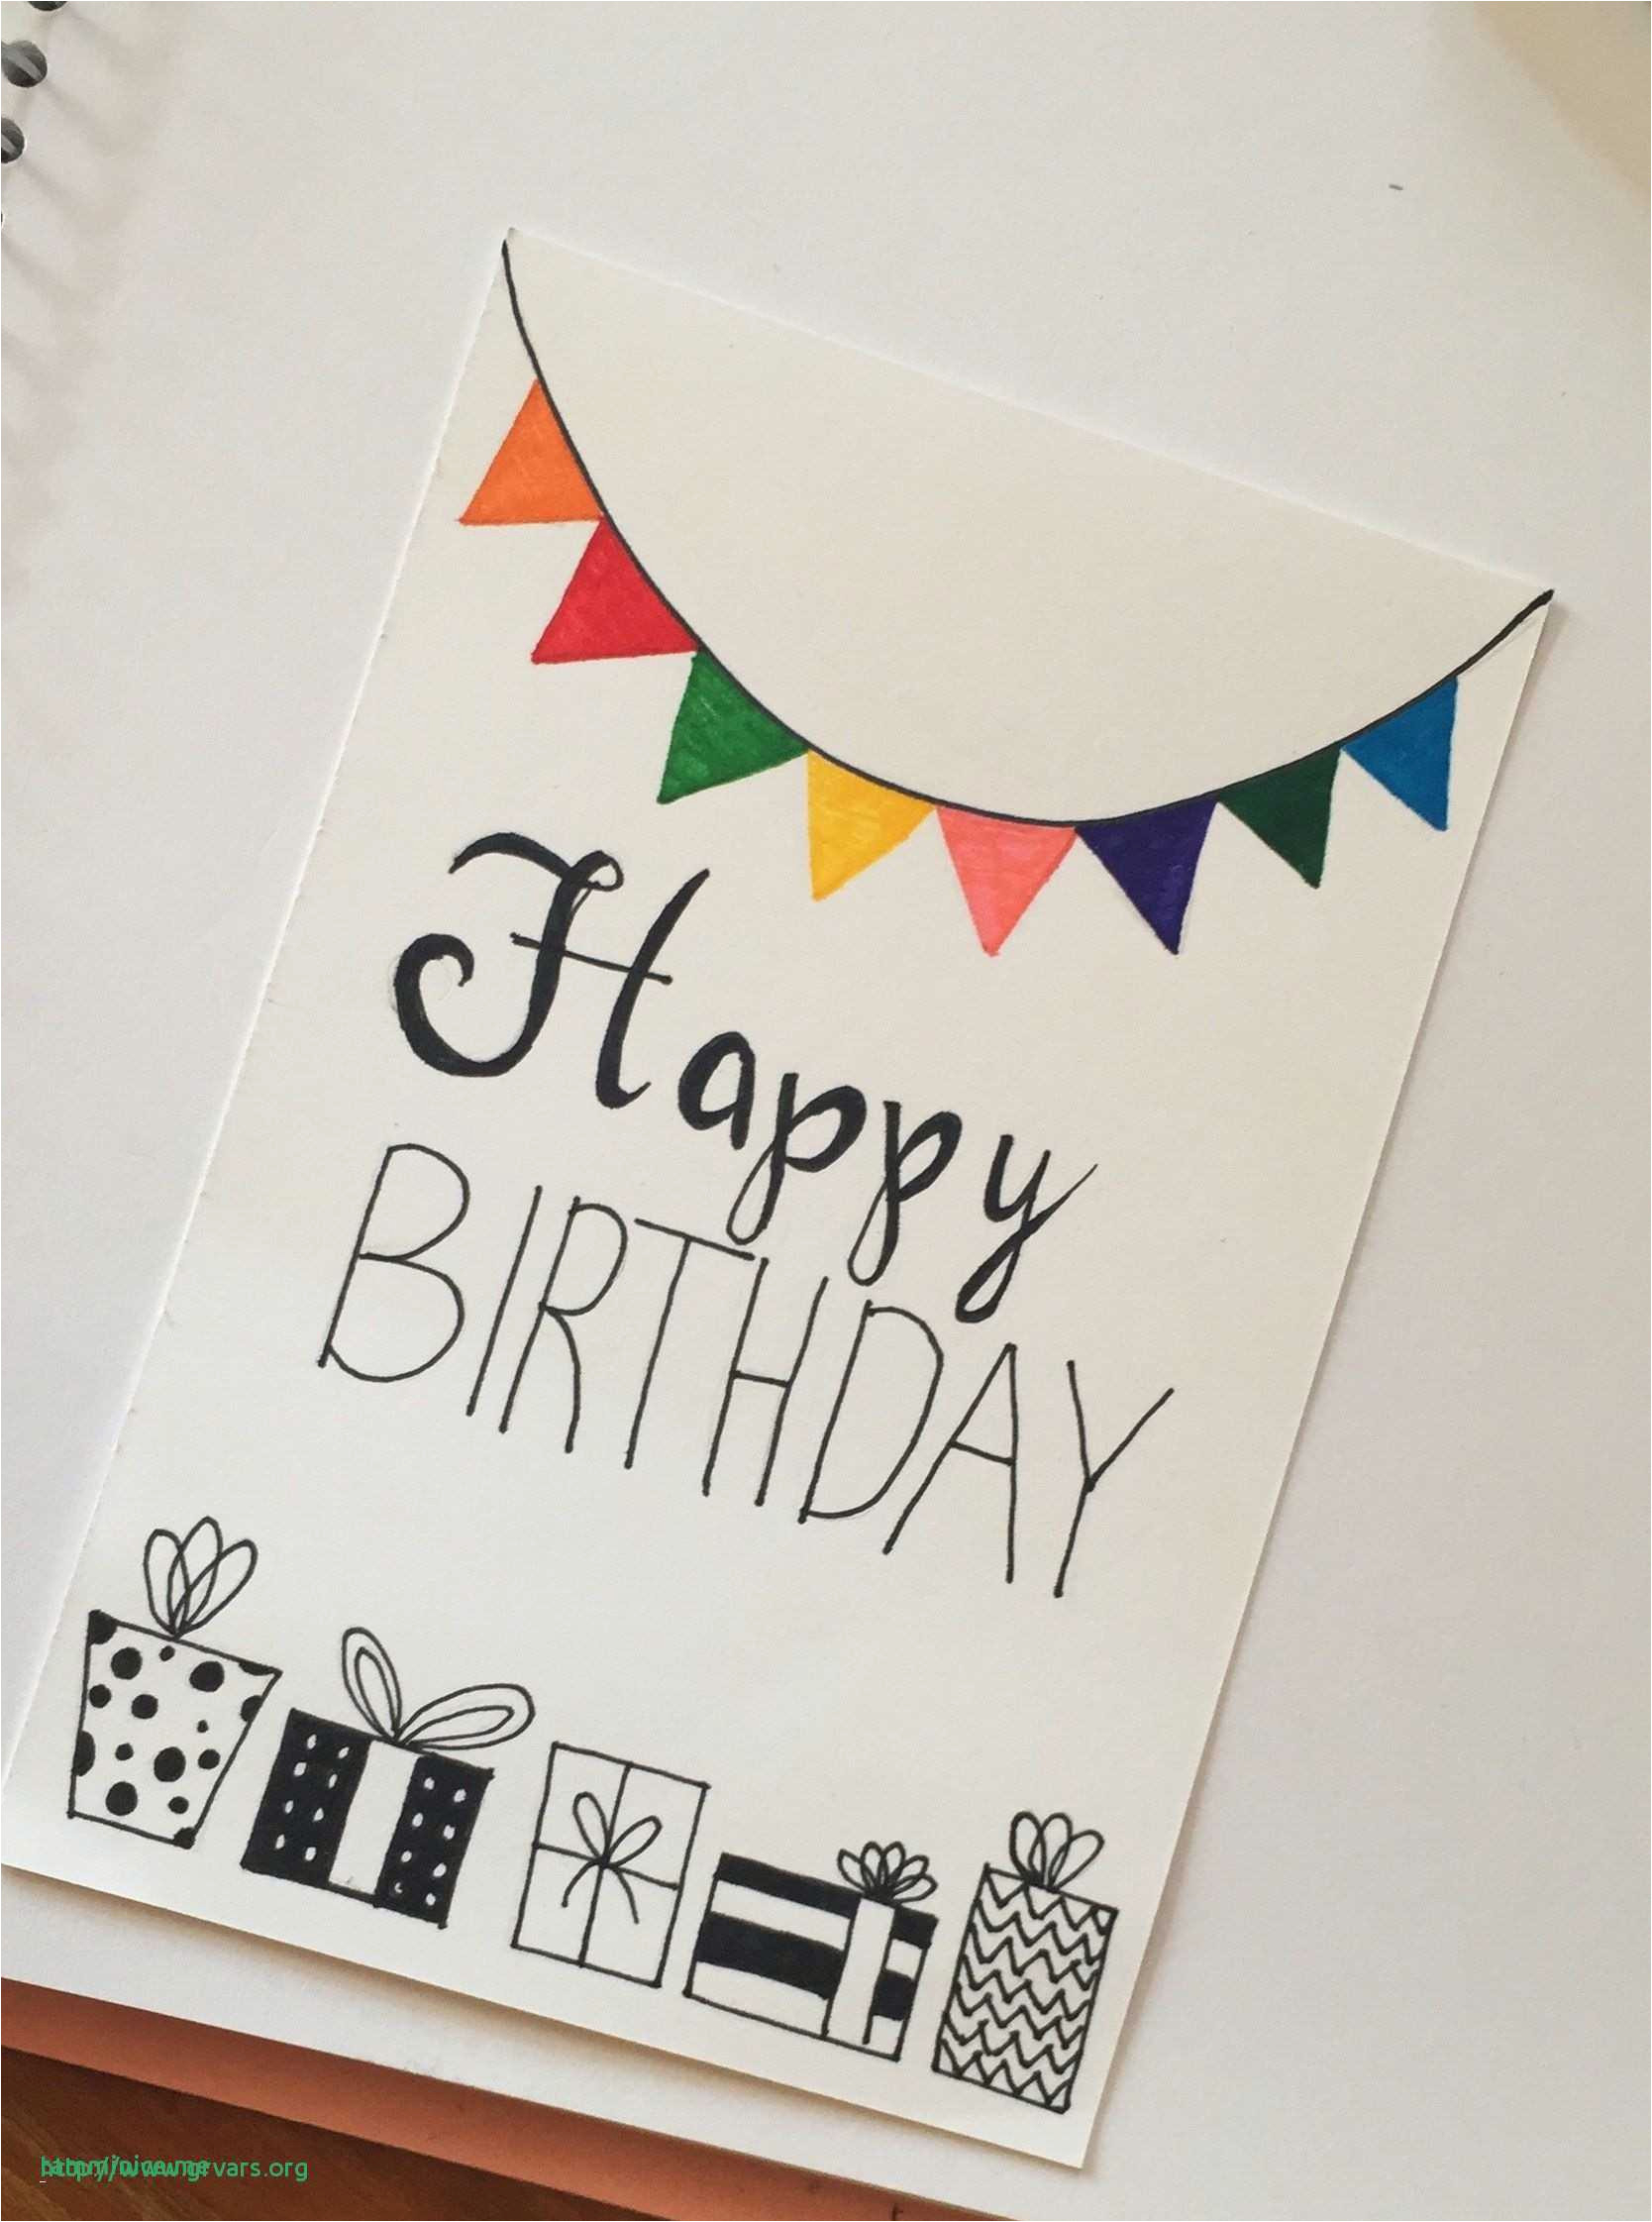 Ideas Of Making Birthday Cards Diy Birthday Card Design Ideas Simple Handmade Birthday Cards